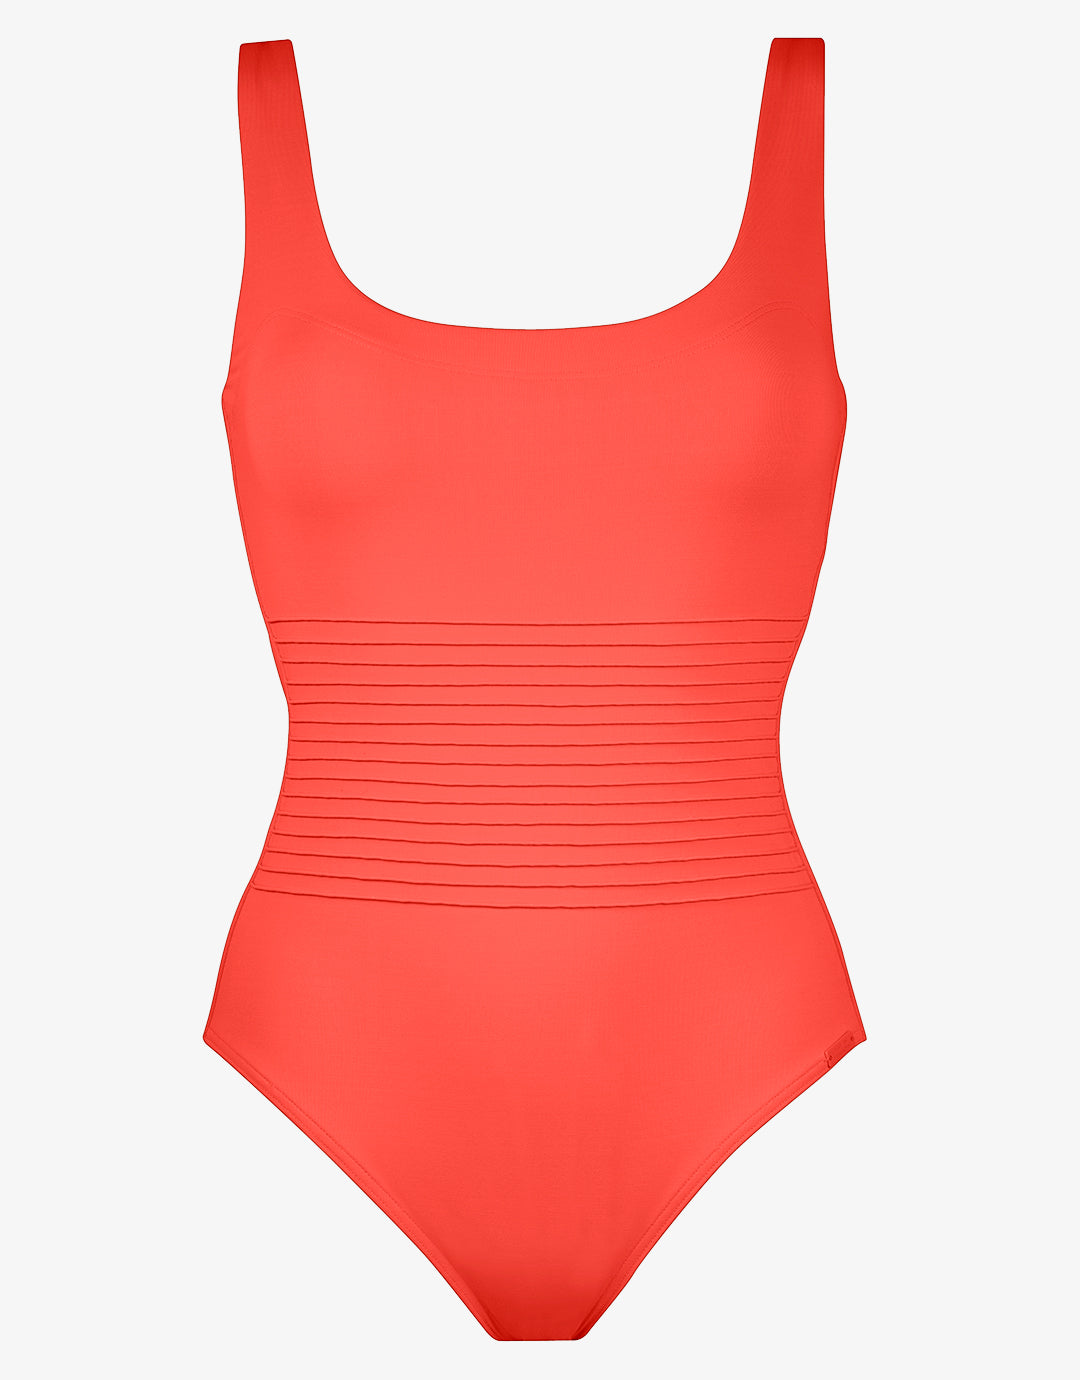 Softline Tank Swimsuit - Flame - Simply Beach UK